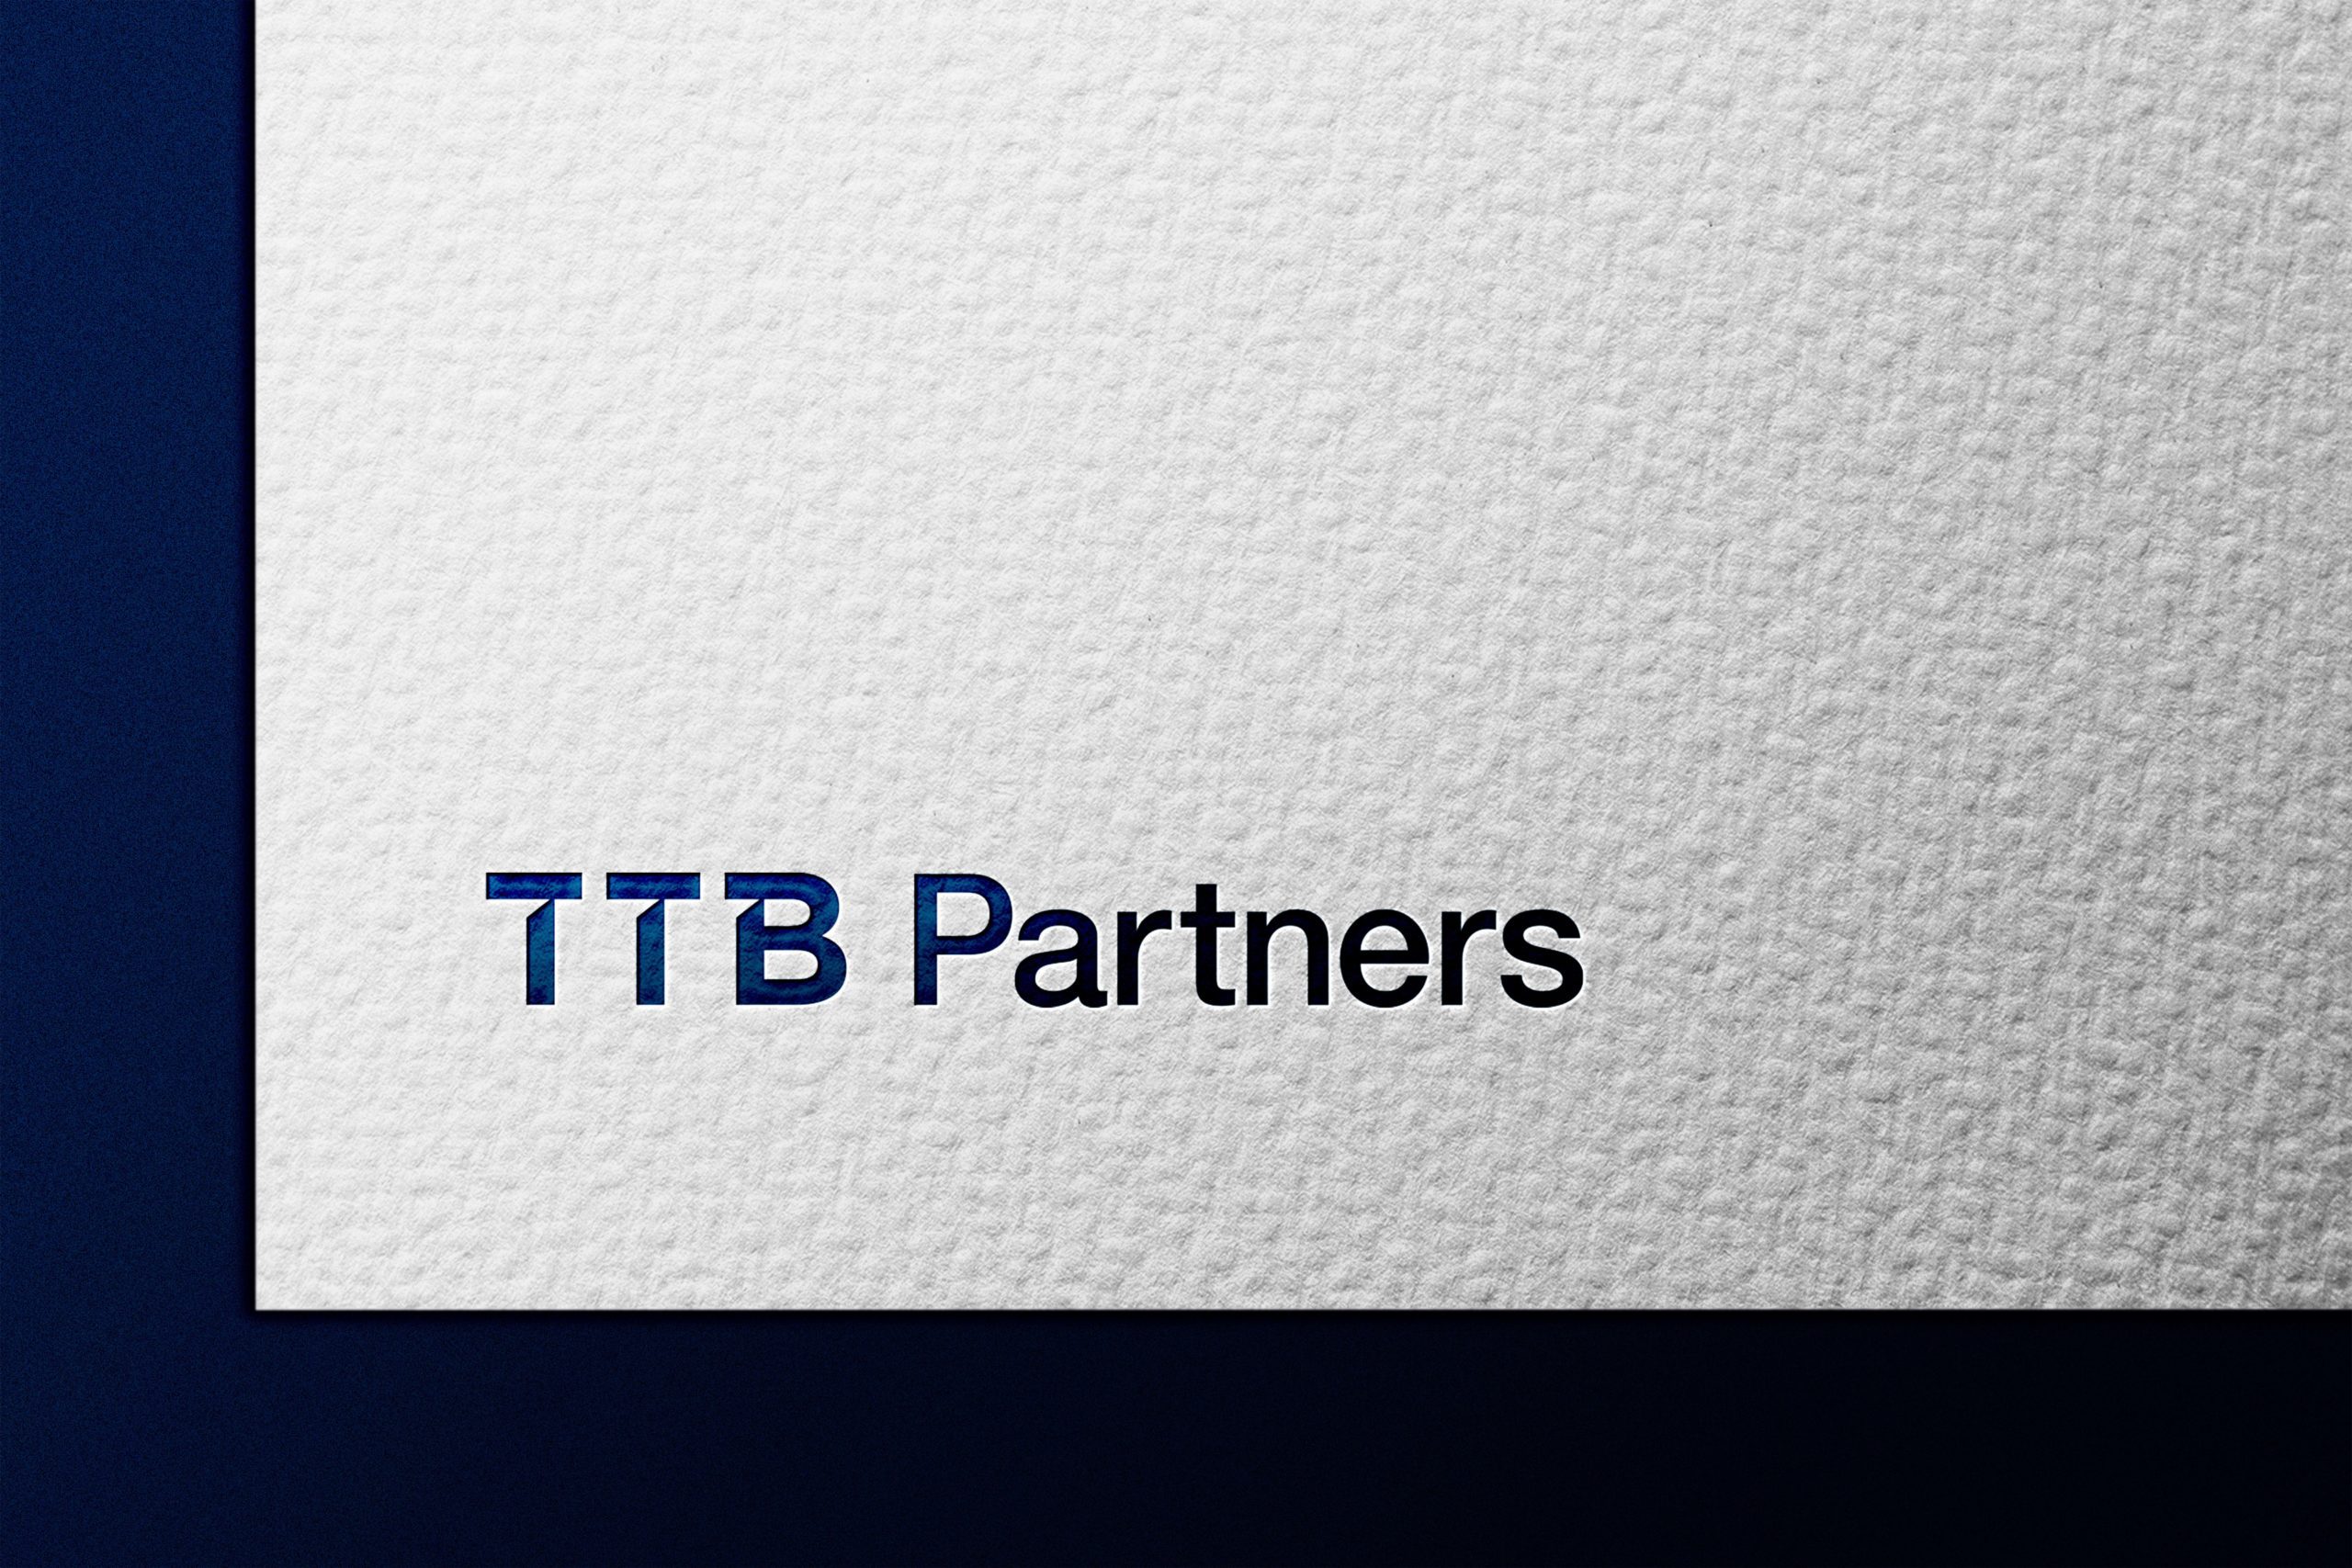 TTB Partners Logo On Paper Texture